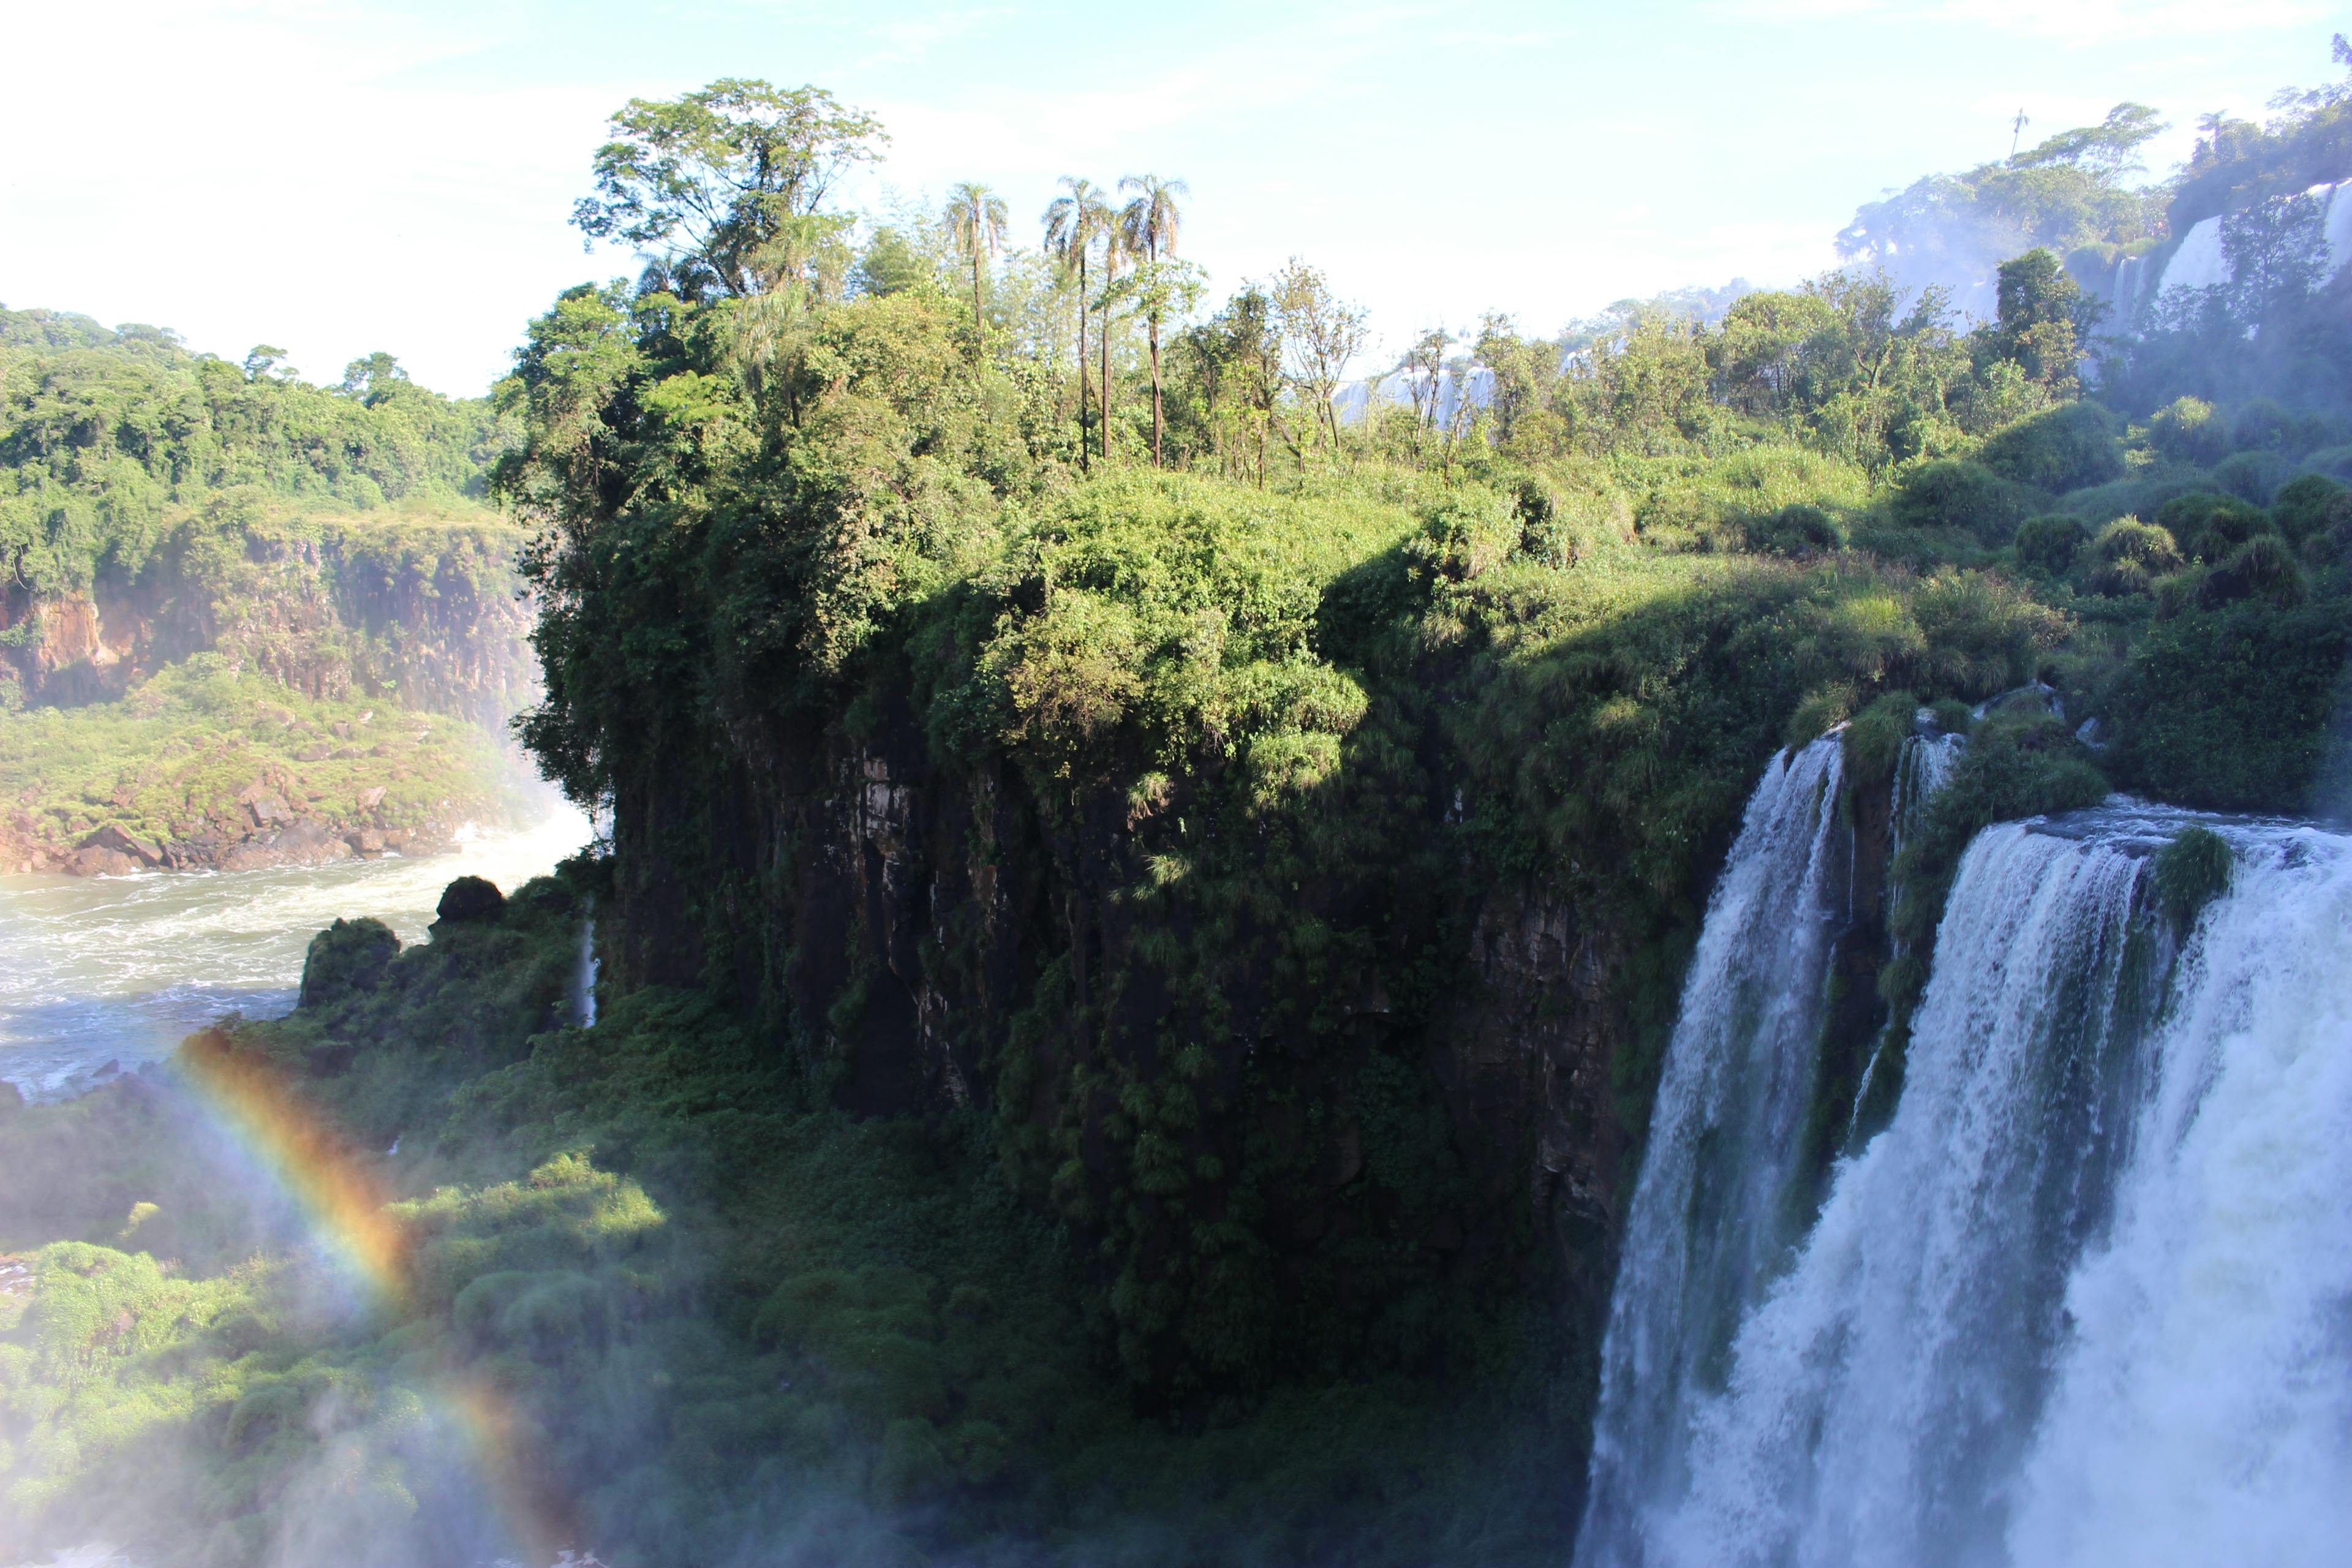 Capturing the rainbow at Iguazú Falls